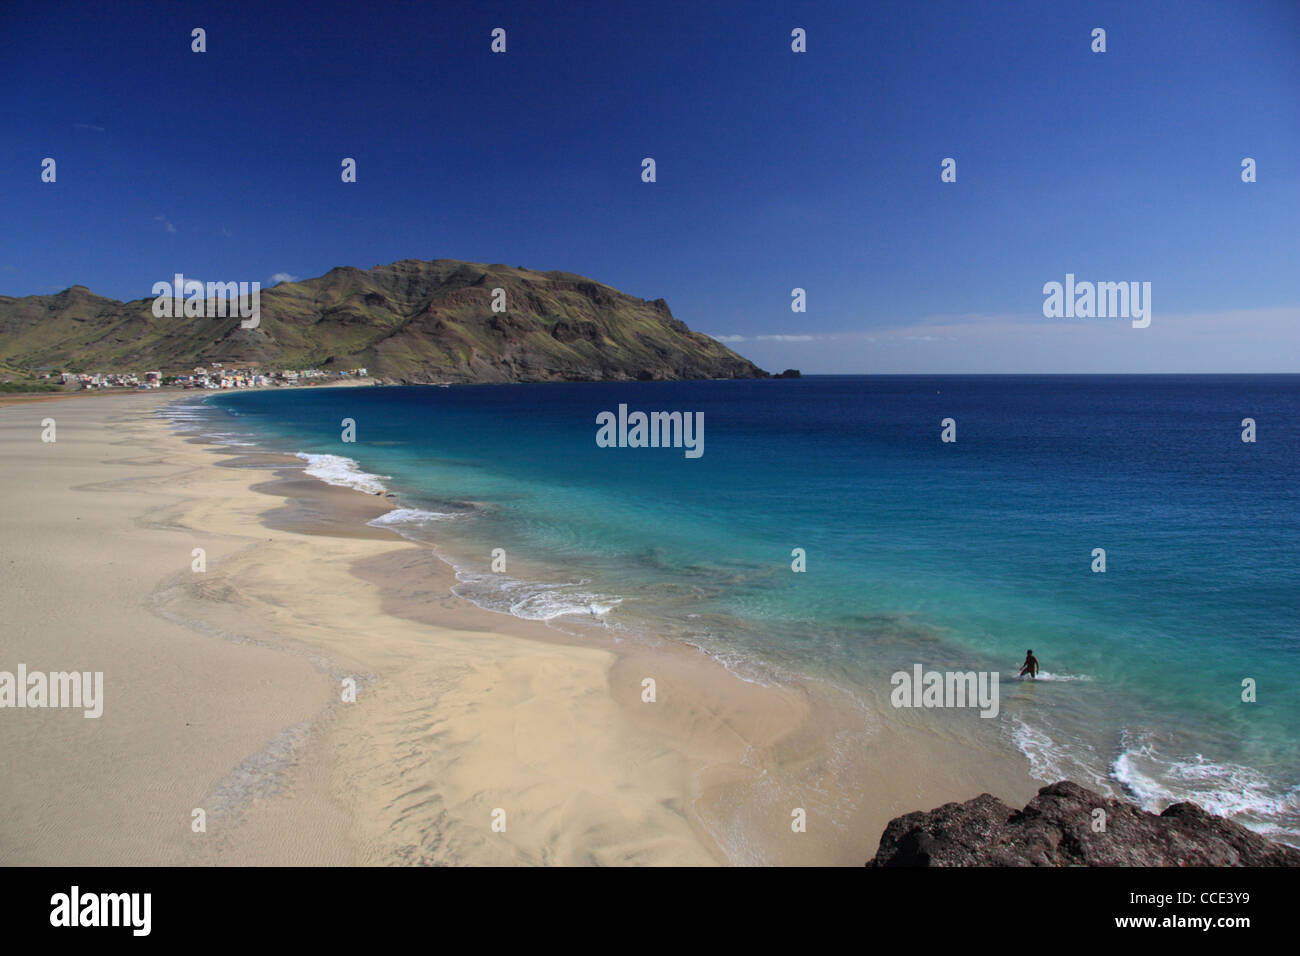 Lone swimmer on San Pedro beach, Sao Vicente Island, Cape Verde Archipelago Stock Photo